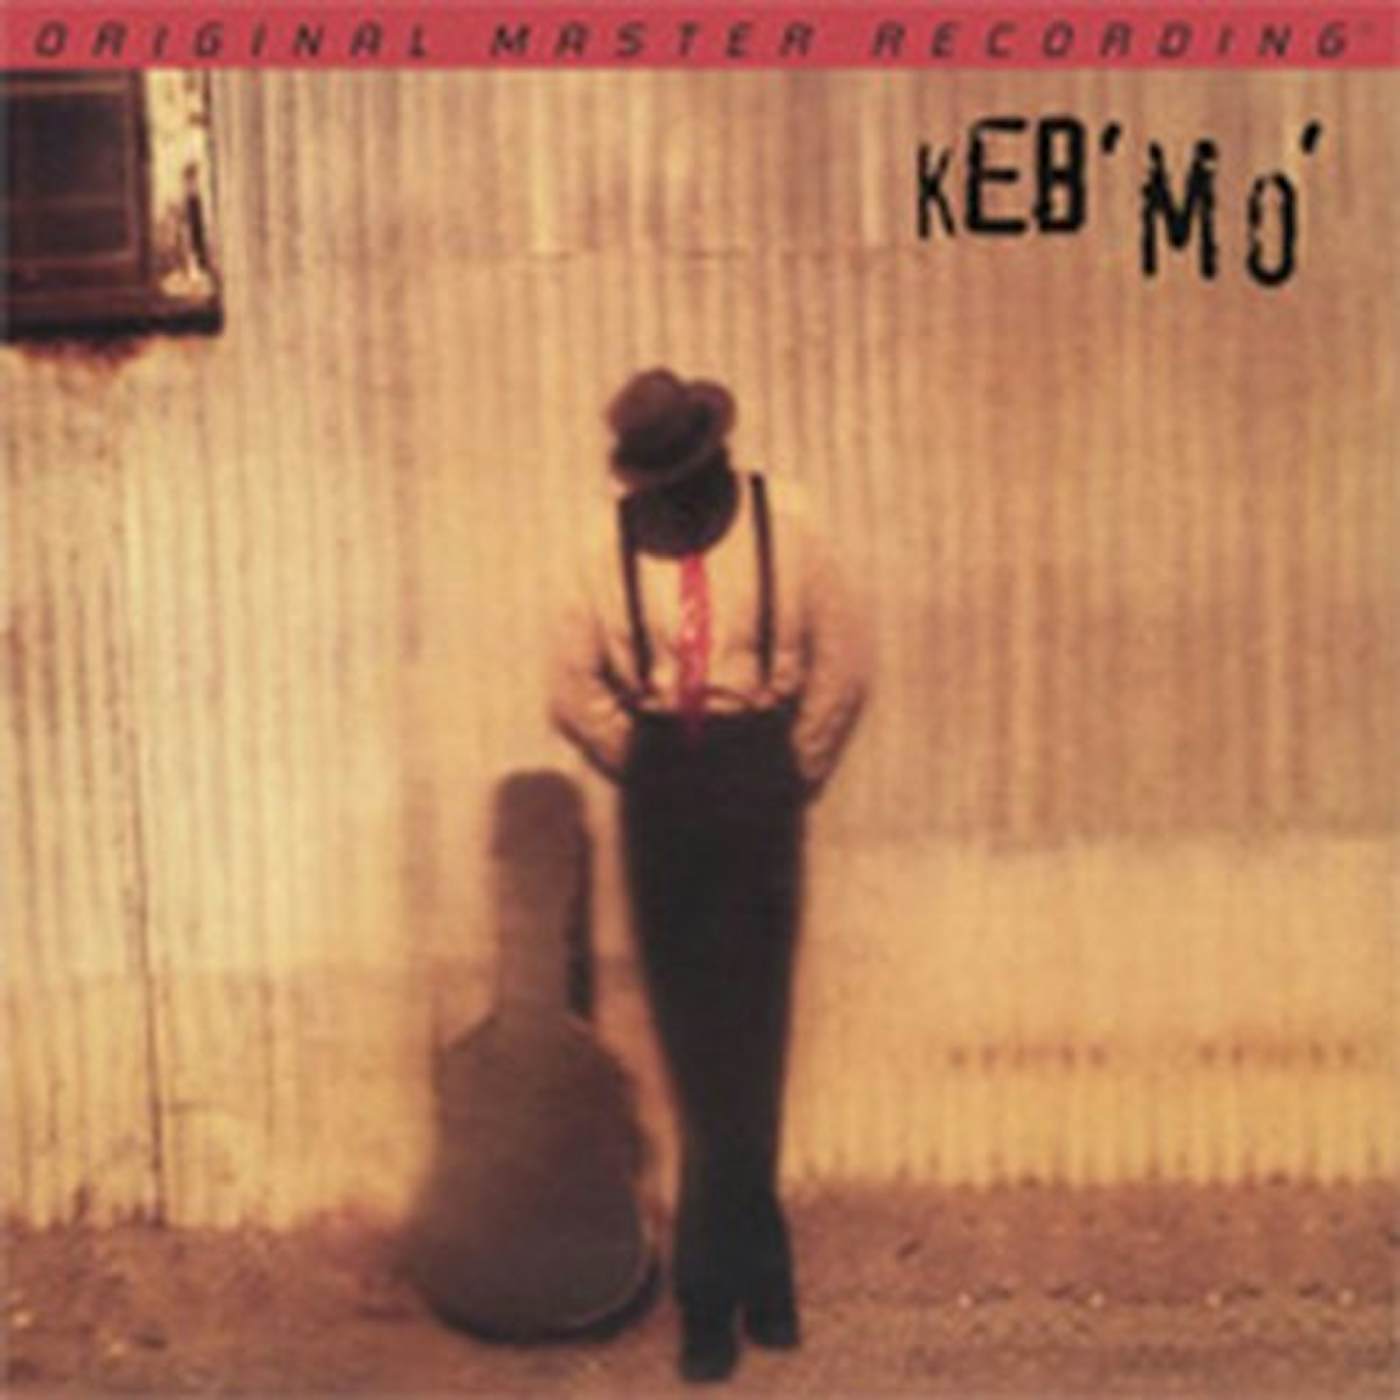 Keb' Mo' Vinyl Record